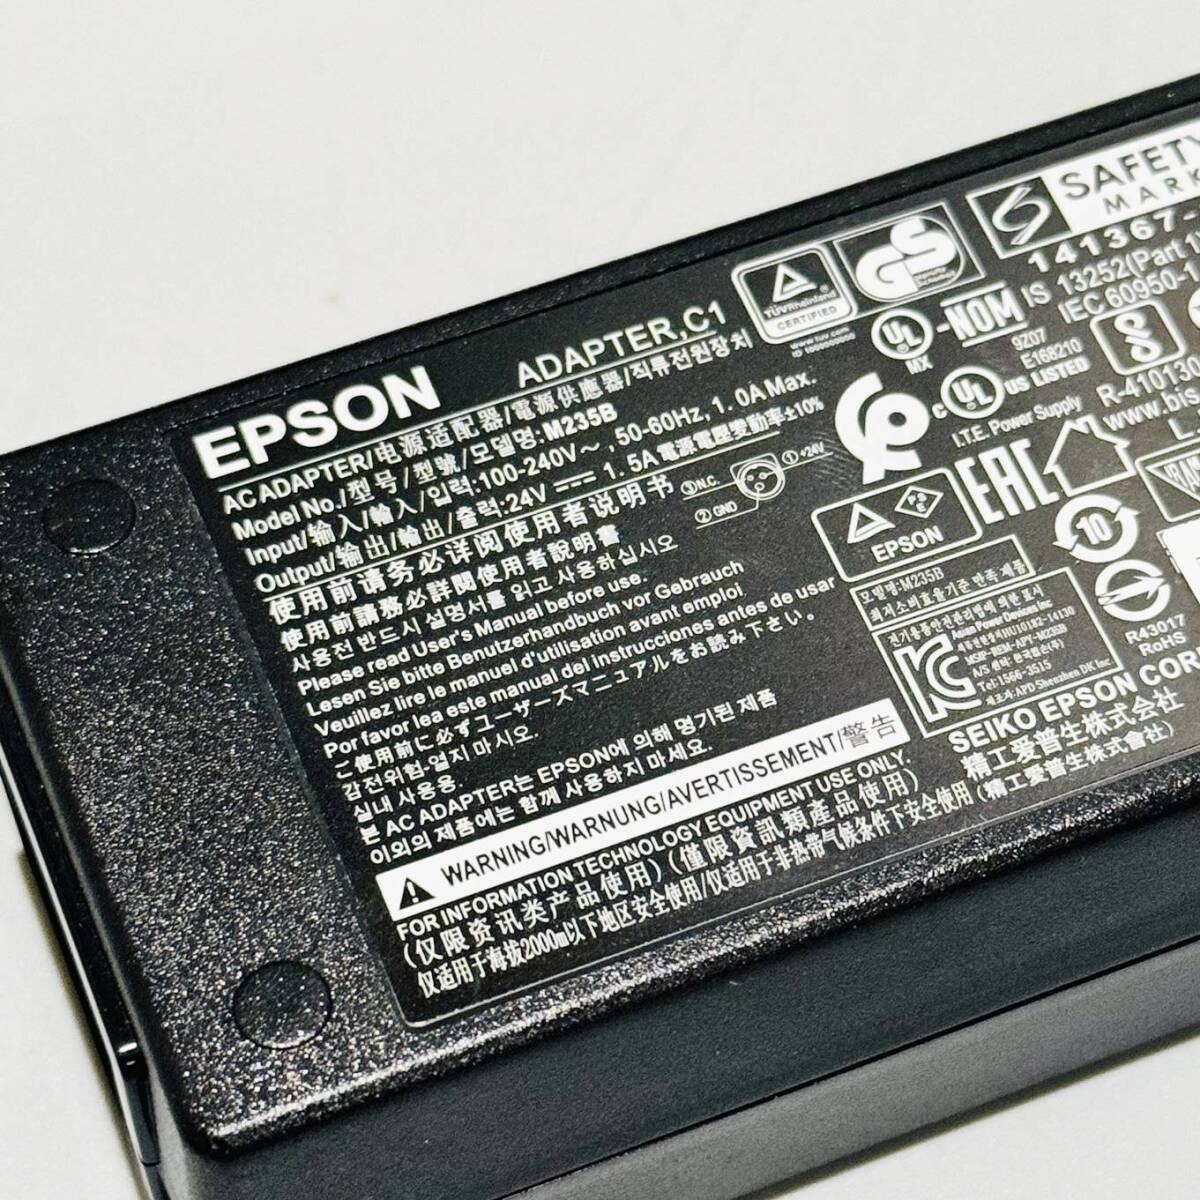 .HK10030 cleaning settled operation verification settled 2019 year made Epson EPSONre seat printer TM-m30 power supply adaptor M235B business use 